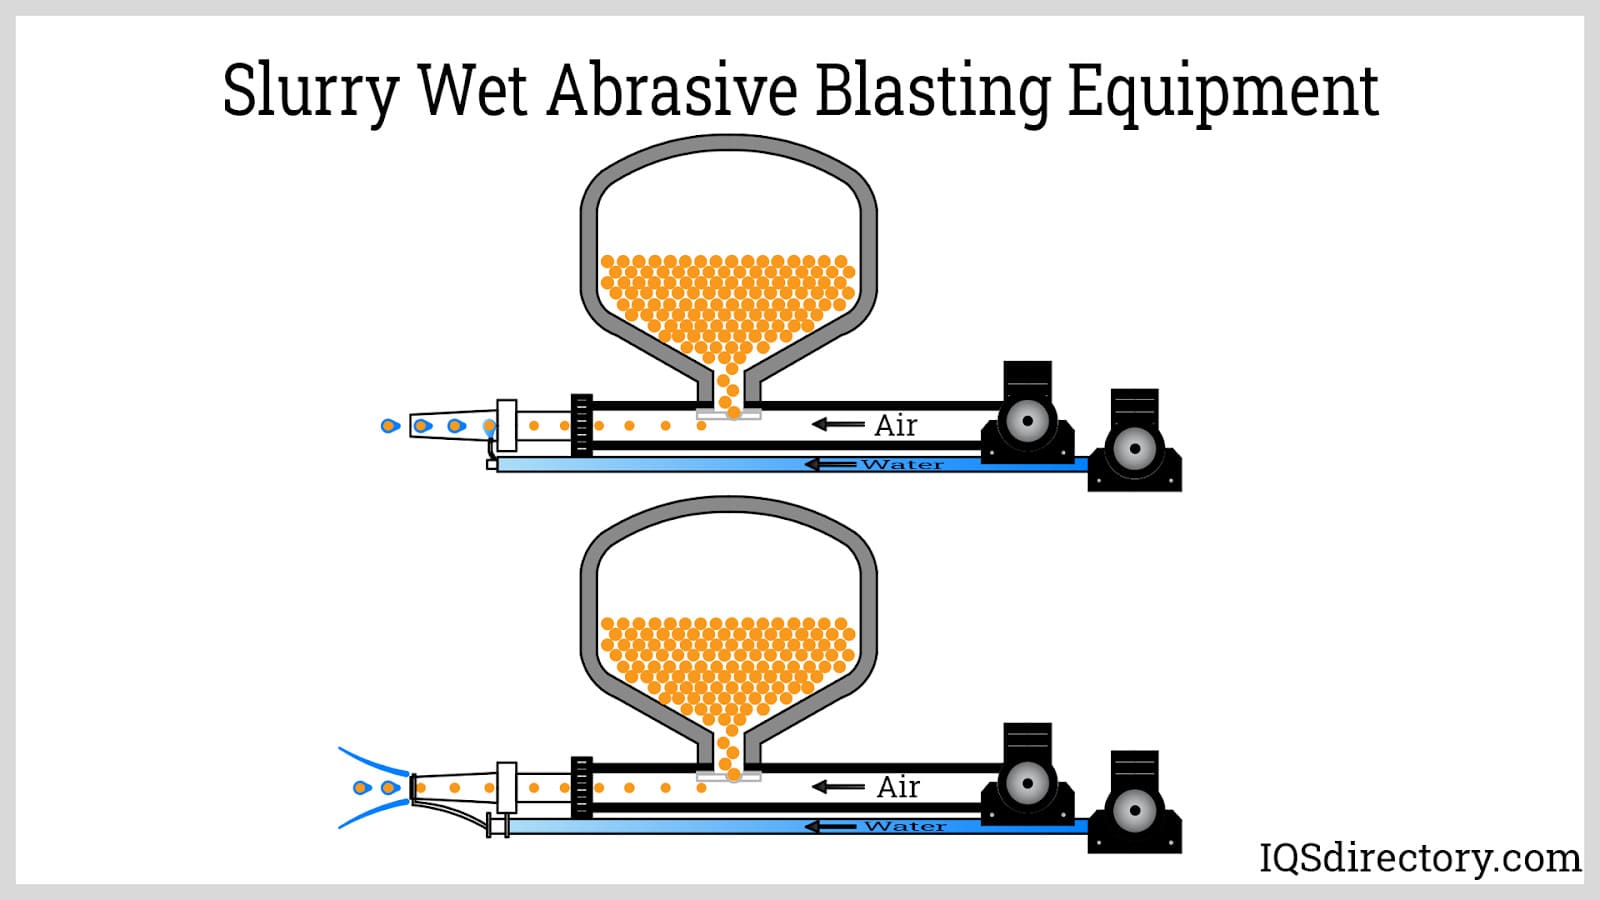 Slurry Wet Abrasive Blasting Equipment